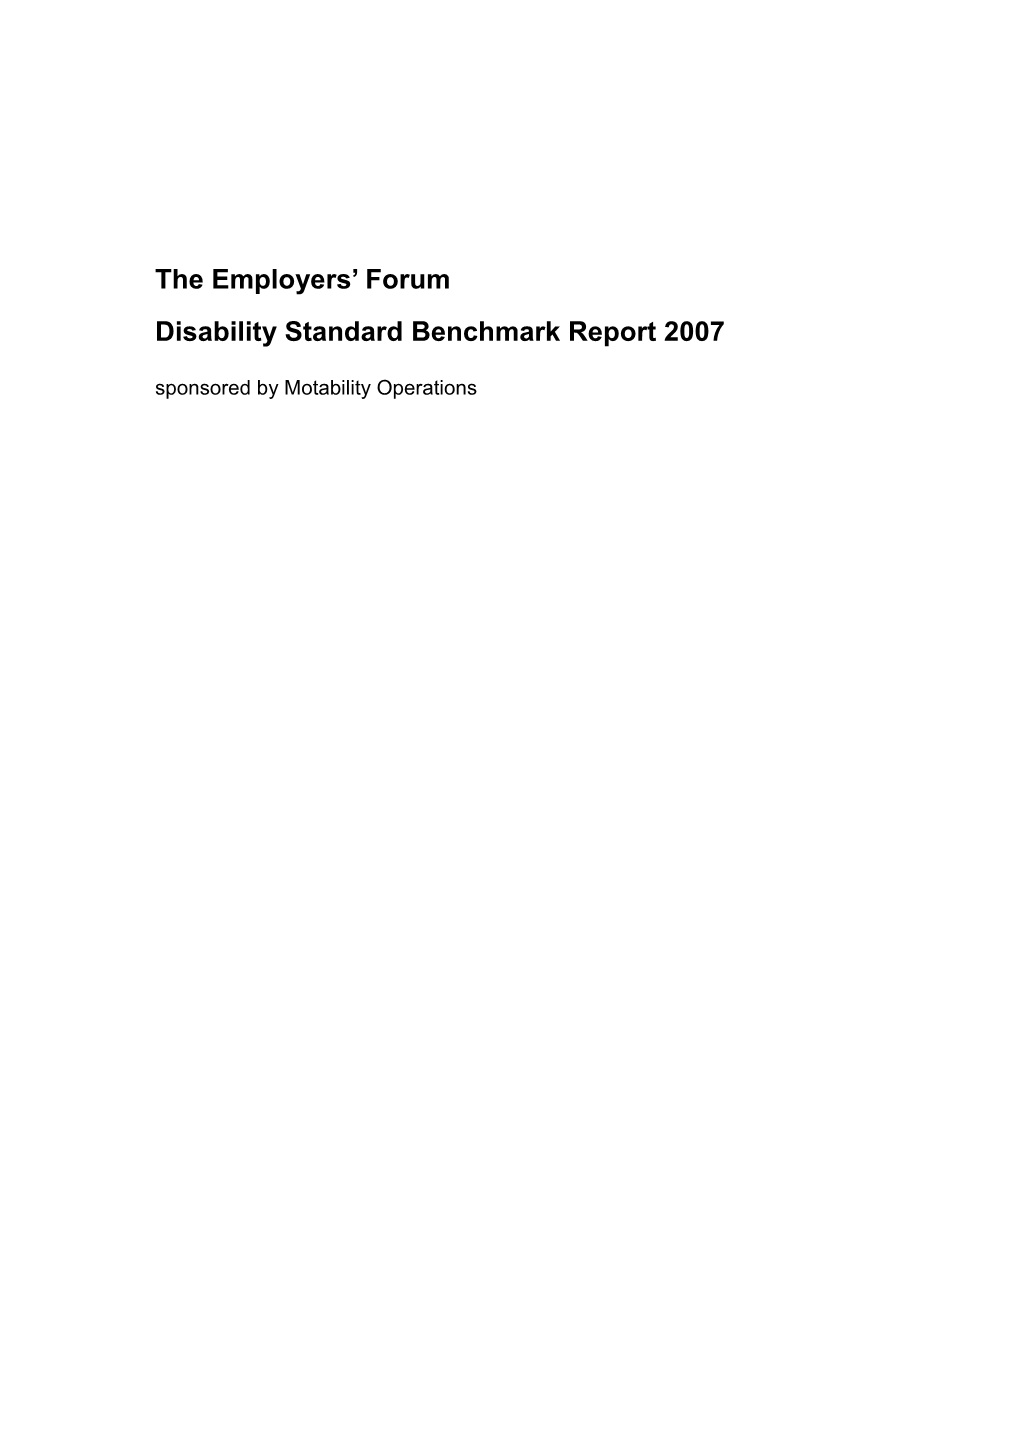 Disability Standard Benchmark Report 2007